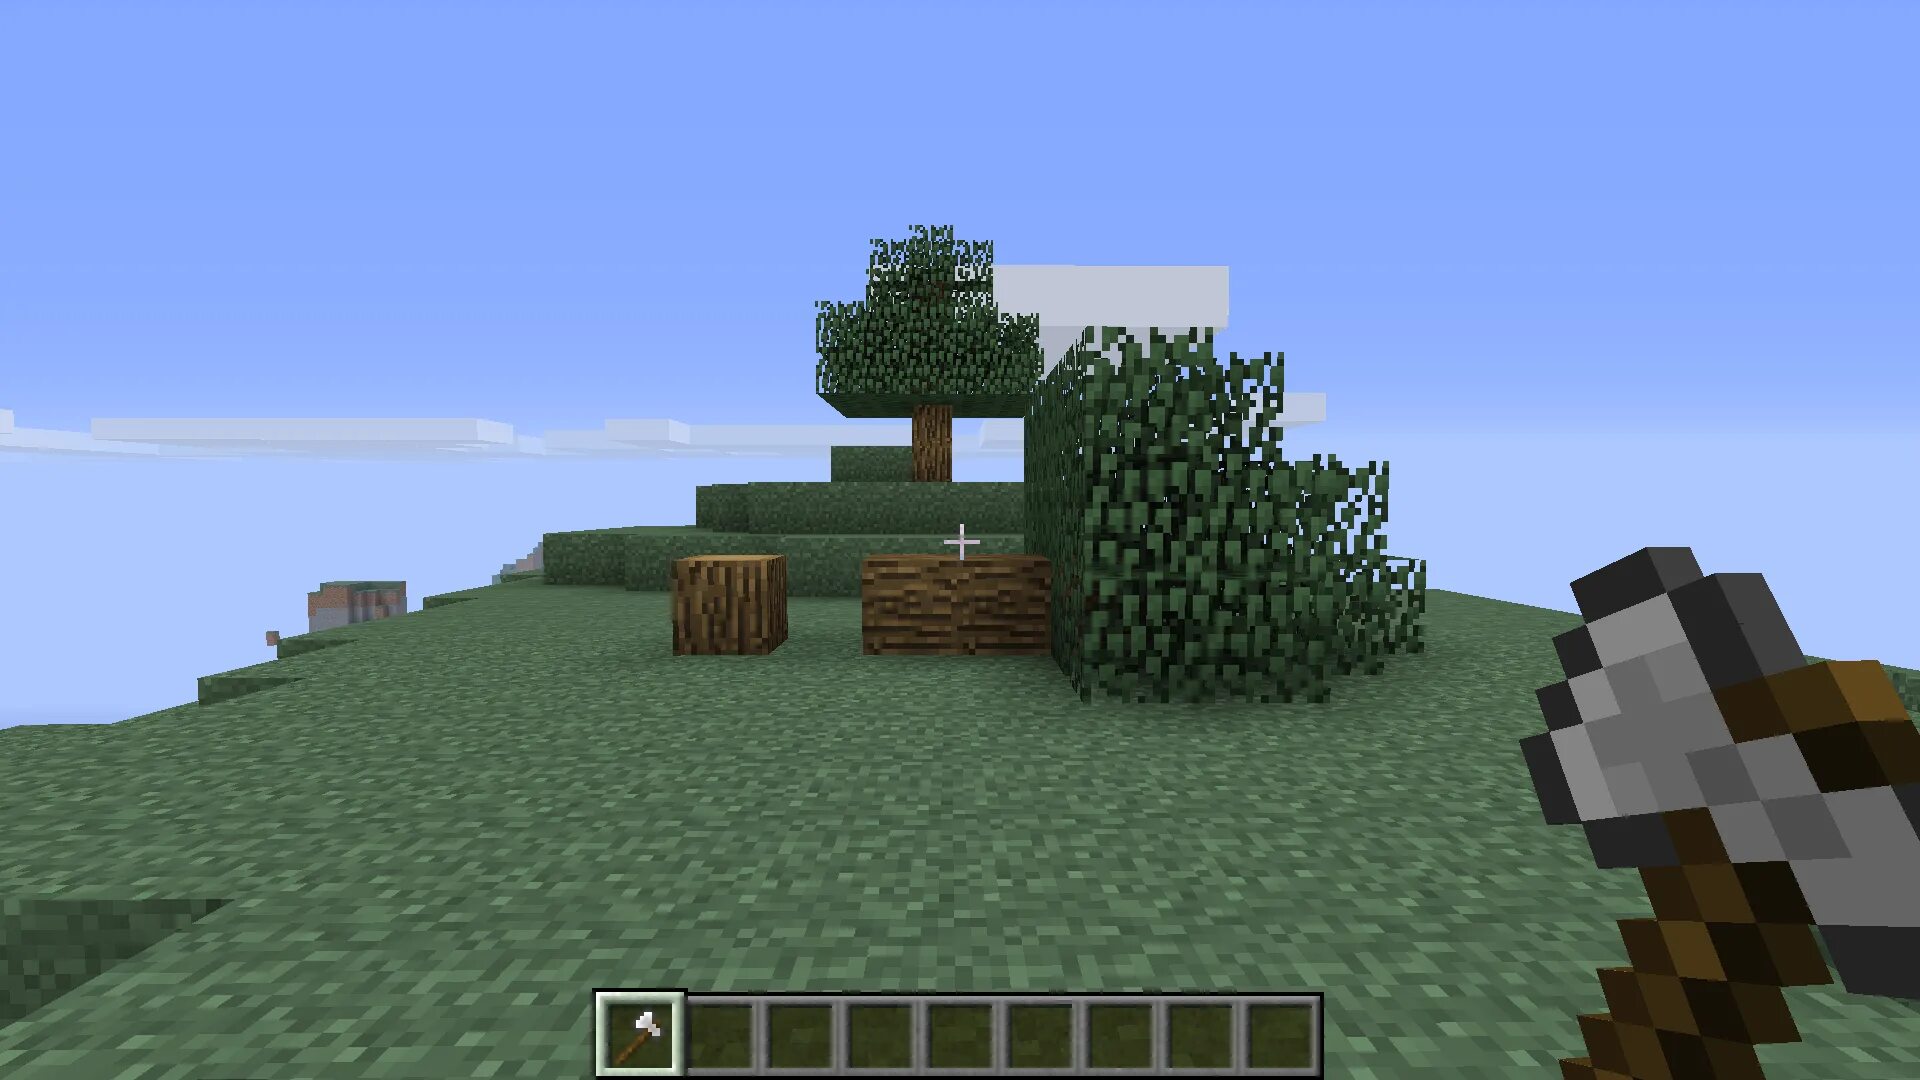 Мод Falling Tree. Treecapitator датапак 1.16.5. Мод на деревья. Мод на срубку деревьев в Minecraft 1.16.5. Майнкрафт мод falling tree